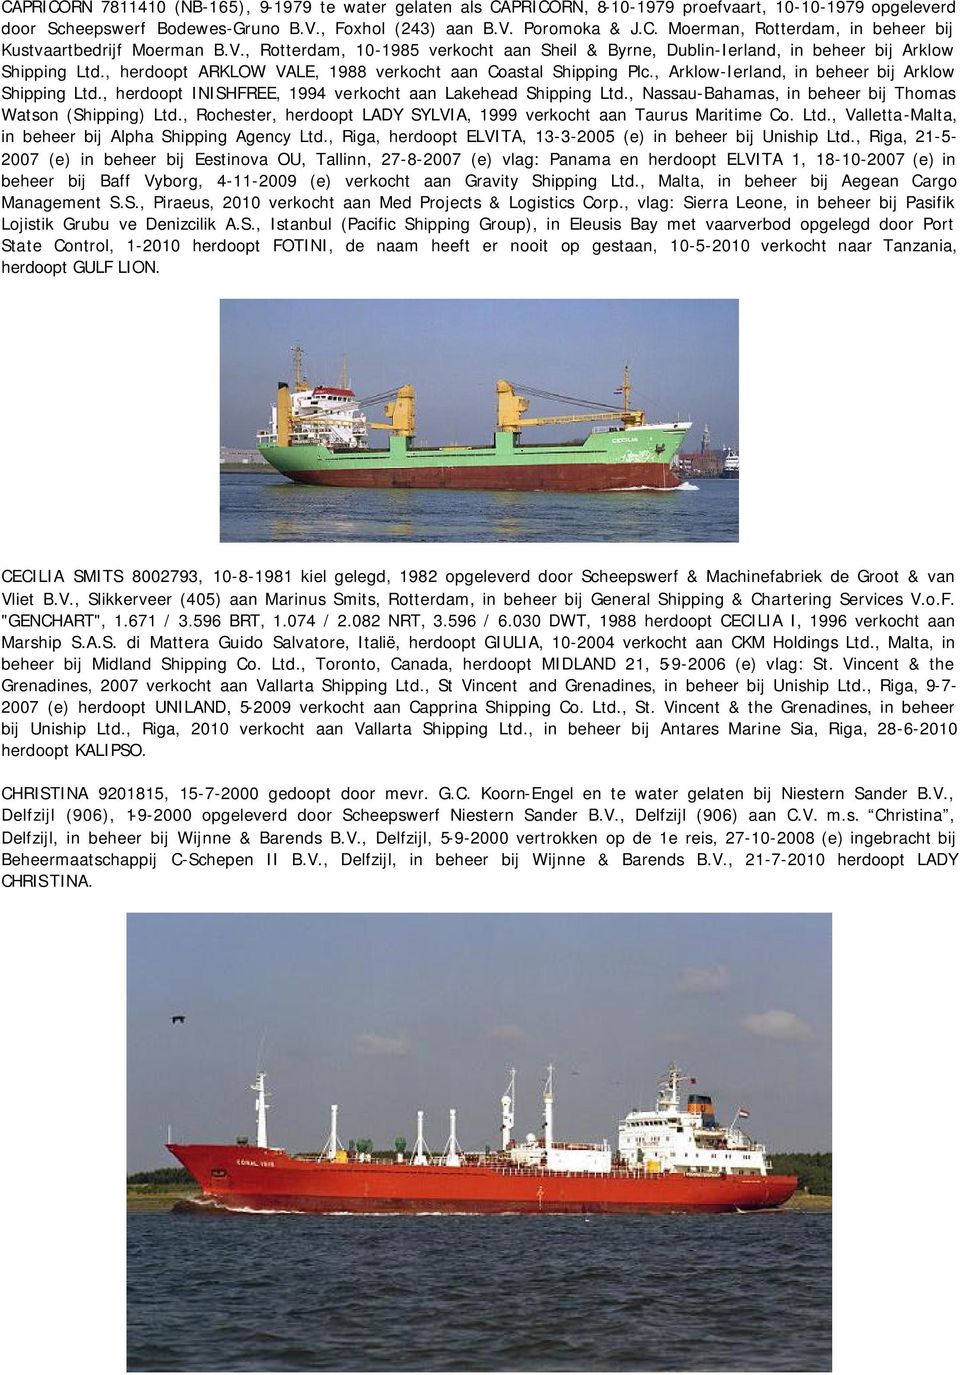 , Arklow-Ierland, in beheer bij Arklow Shipping Ltd., herdoopt INISHFREE, 1994 verkocht aan Lakehead Shipping Ltd., Nassau-Bahamas, in beheer bij Thomas Watson (Shipping) Ltd.